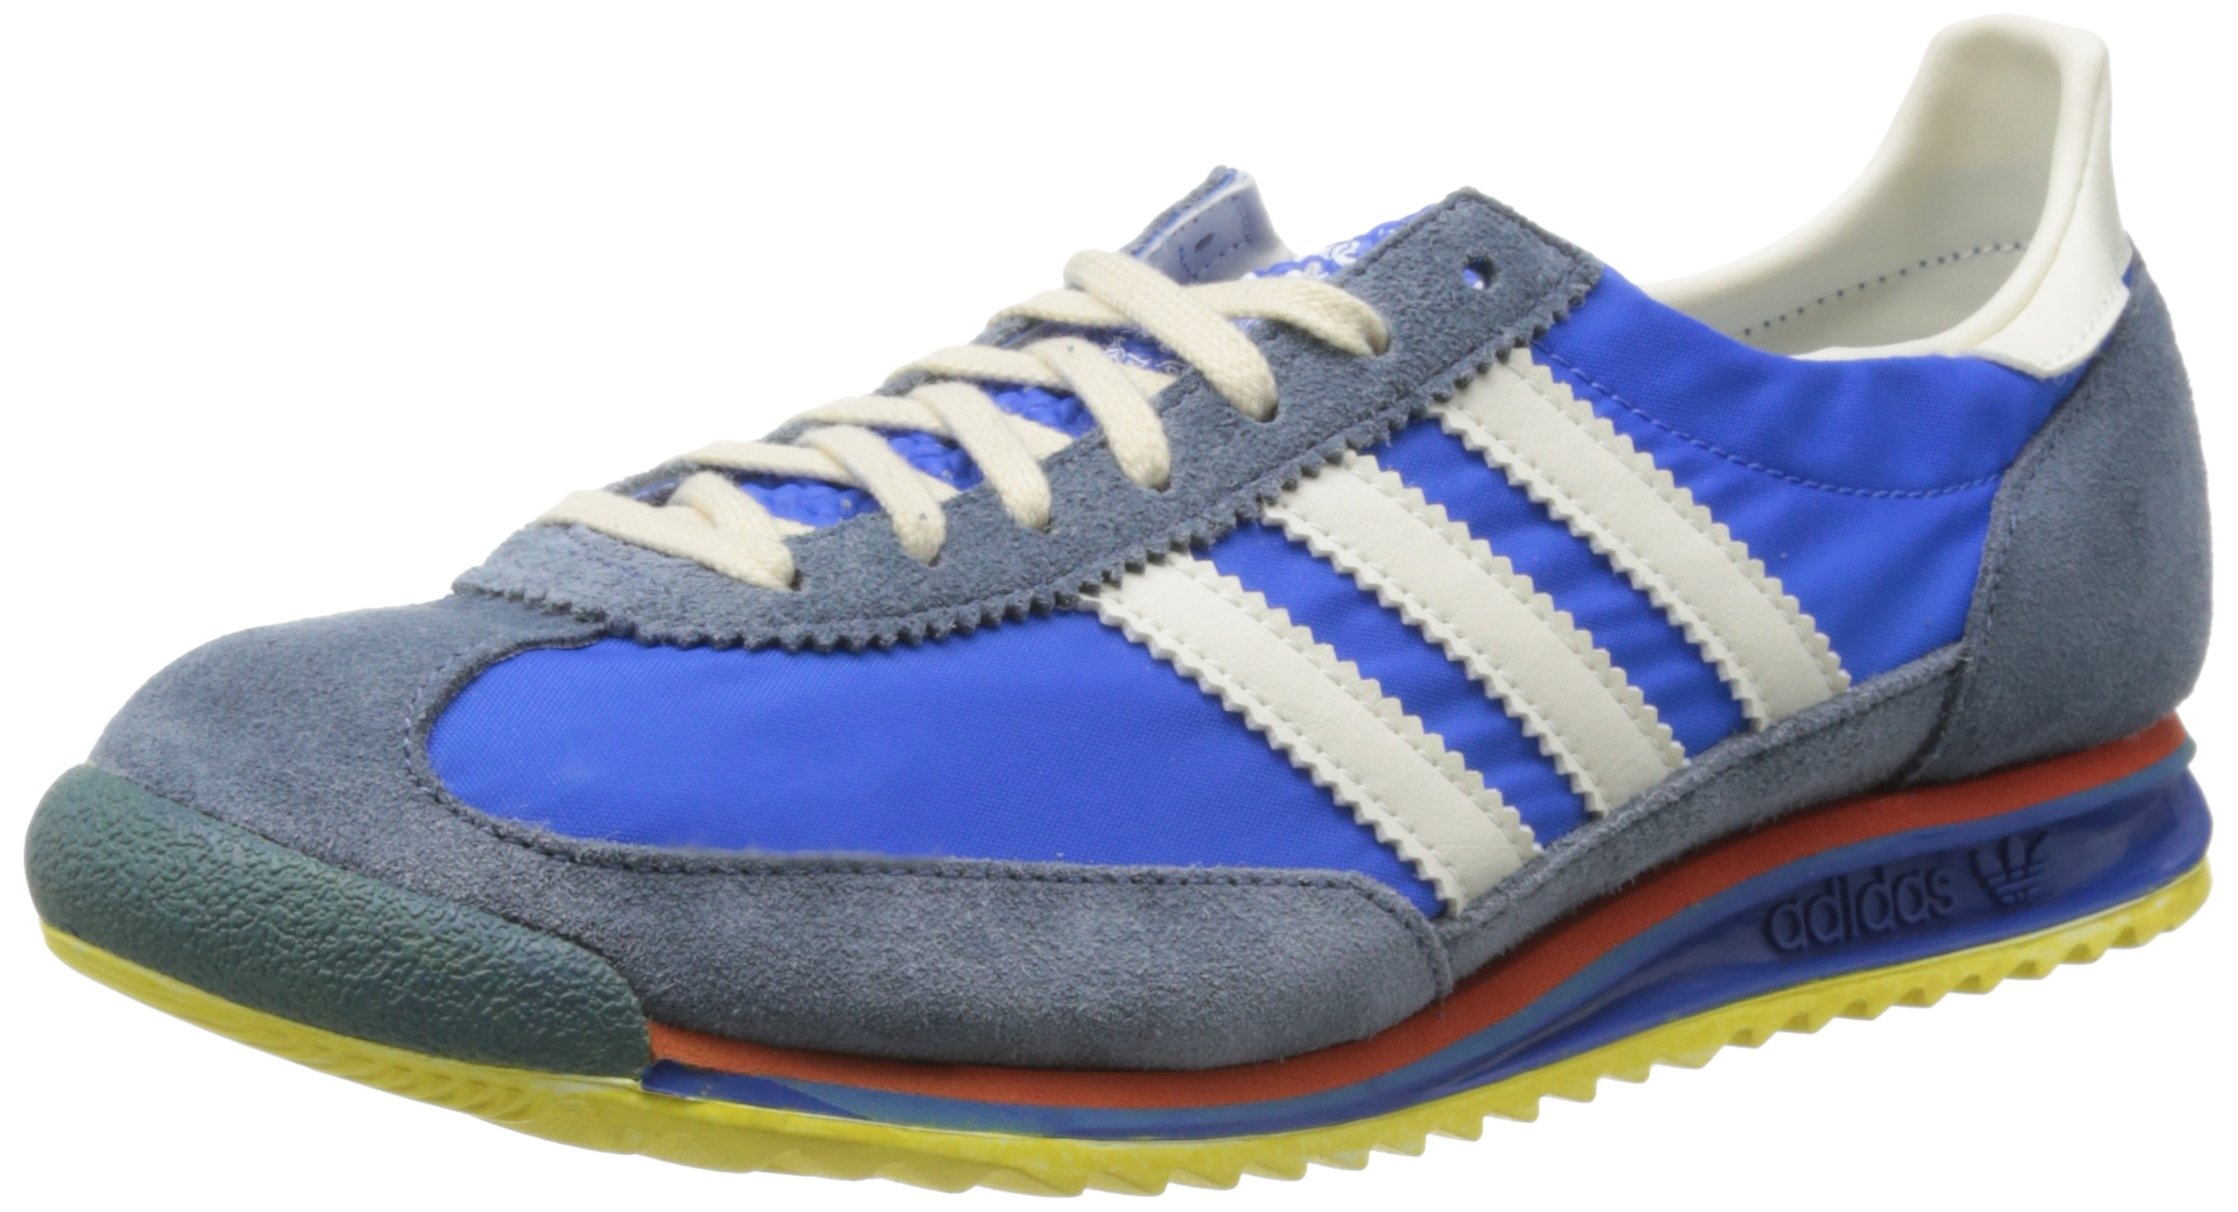 adidas Originals SL 72 909495, Herren Sportive Sneakers, Blau (AIR FORCE BLUE / LEGACY / SLATE), EU 46 (UK 11) - 47 EU